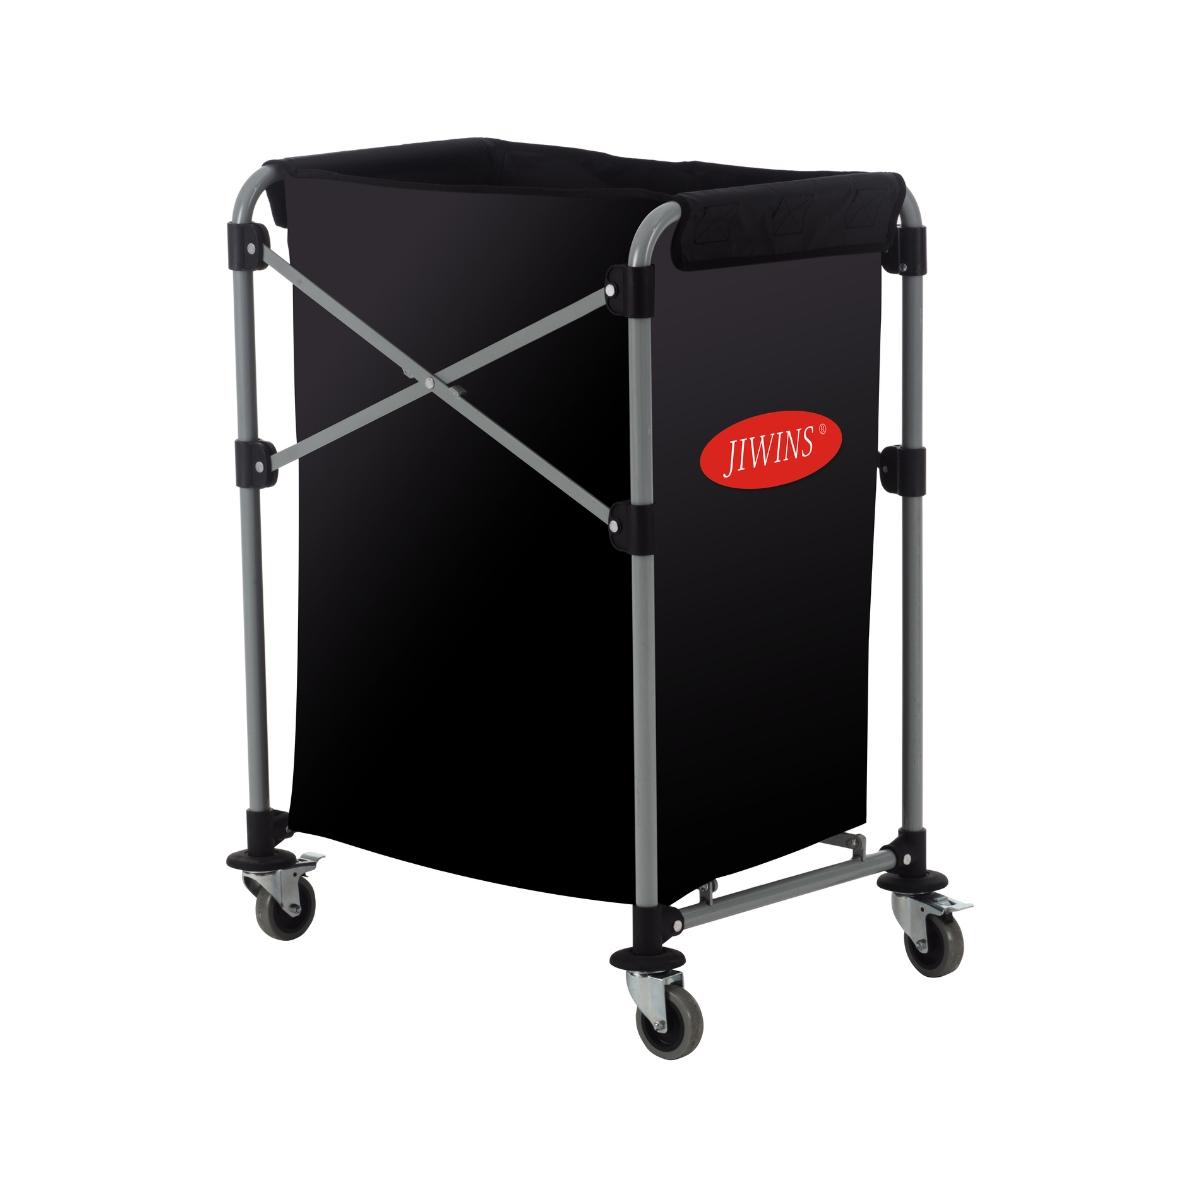 Jiwins 150 Liter Collapsible Laundry Cart Black Black Silver Plastic